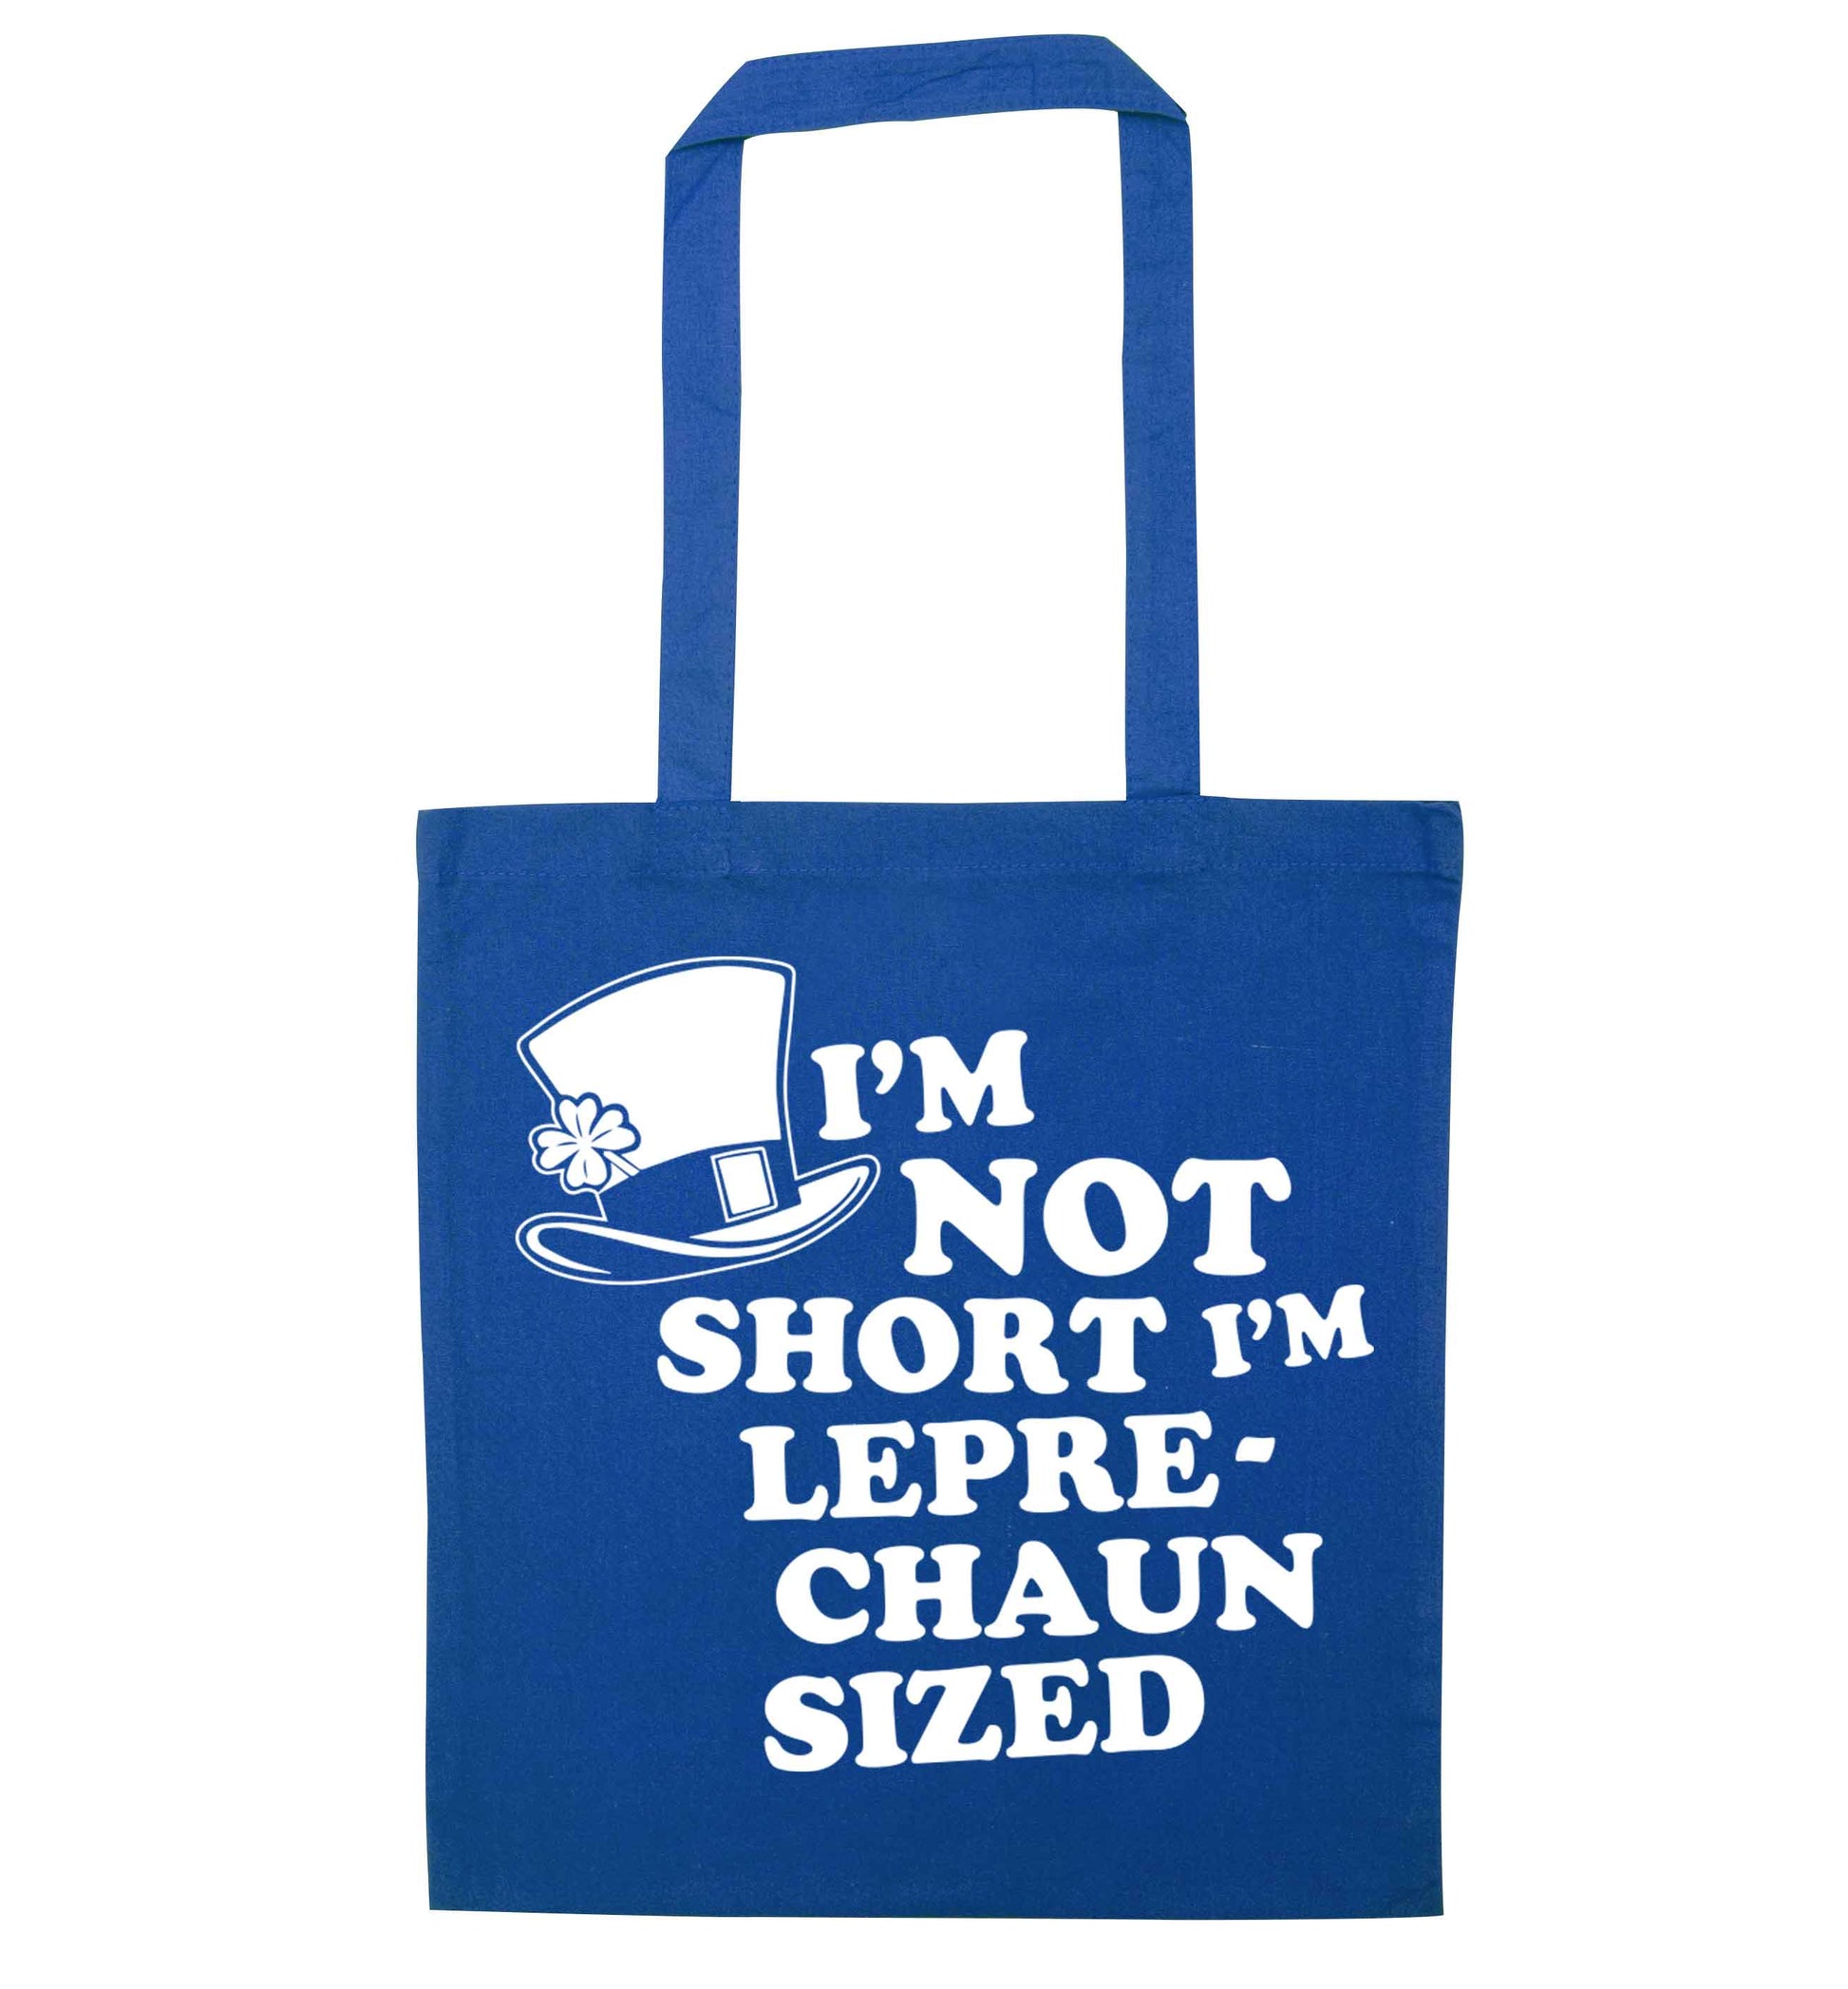 I'm not short I'm leprechaun sized blue tote bag